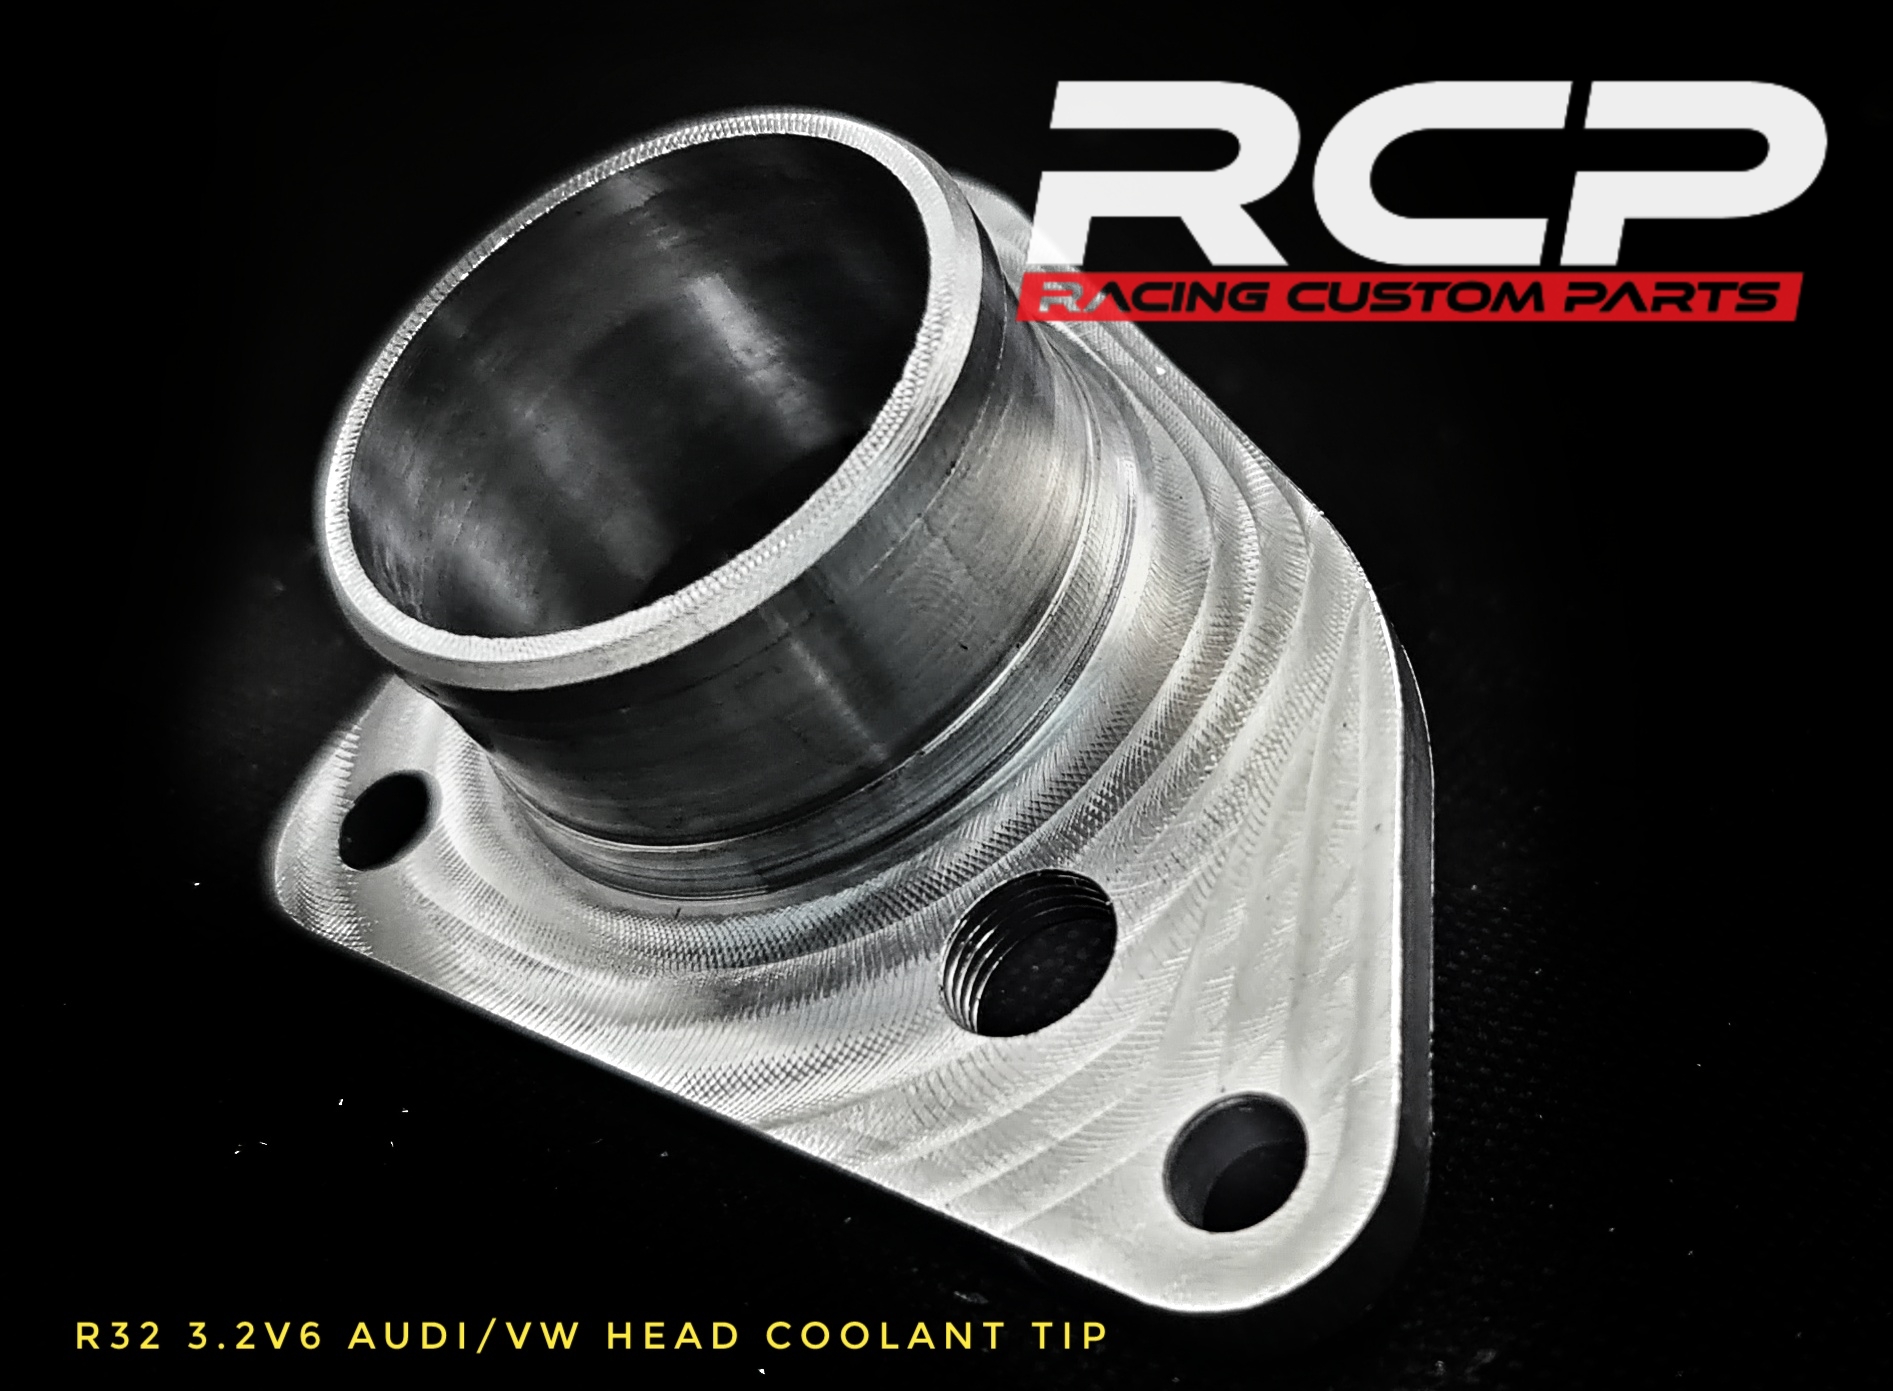 r32 3.2 v6 audi vw head coolant adapter tip turbo tuning rcp racing custom parts billet cnc